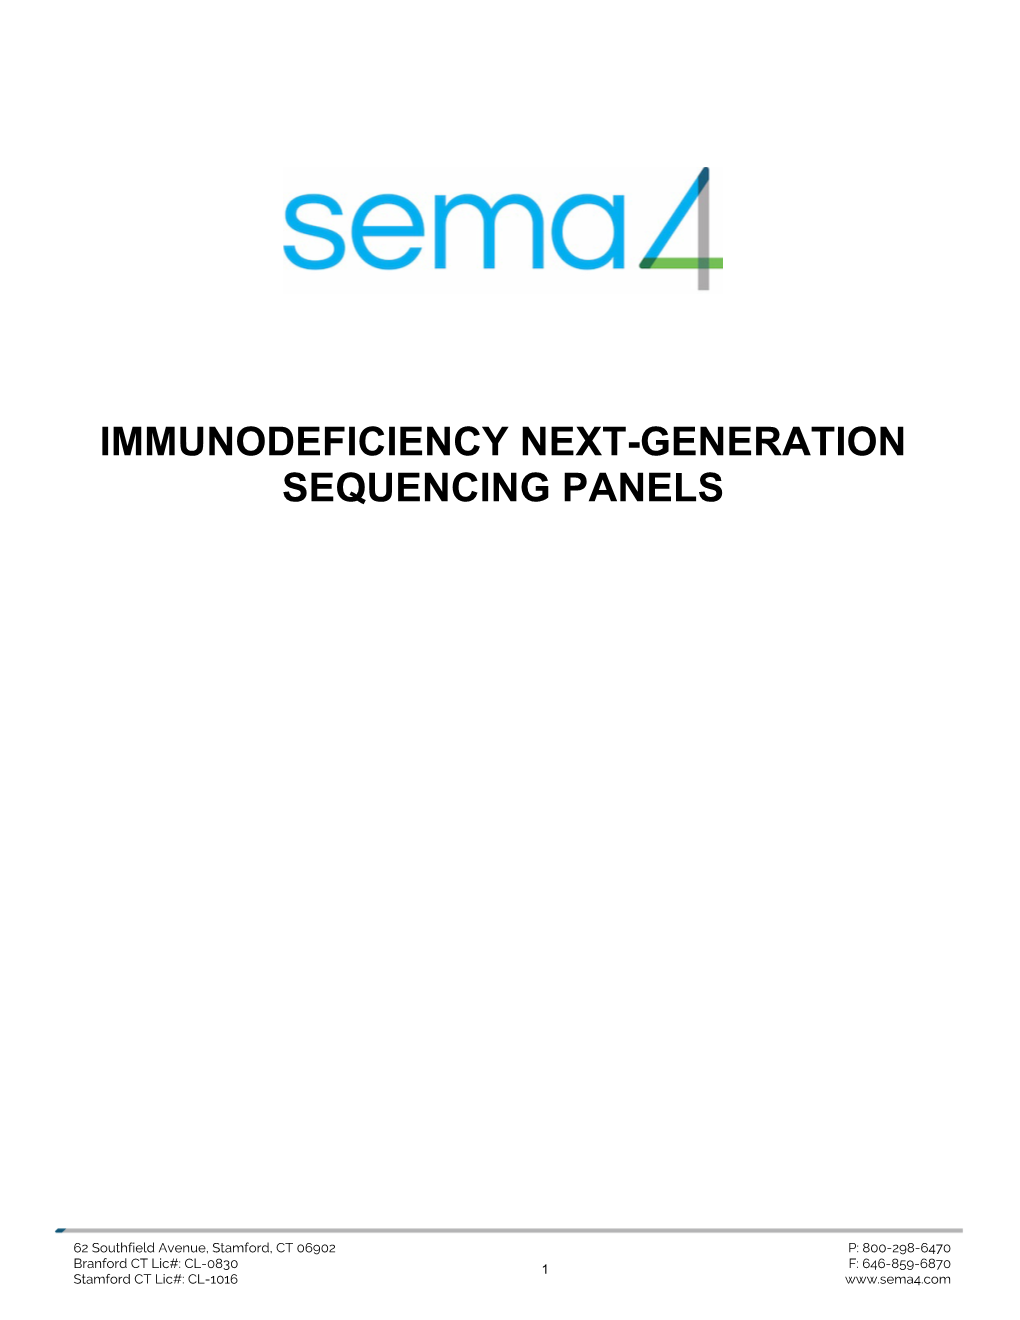 Sema4 Immunodeficiency Information Sheet